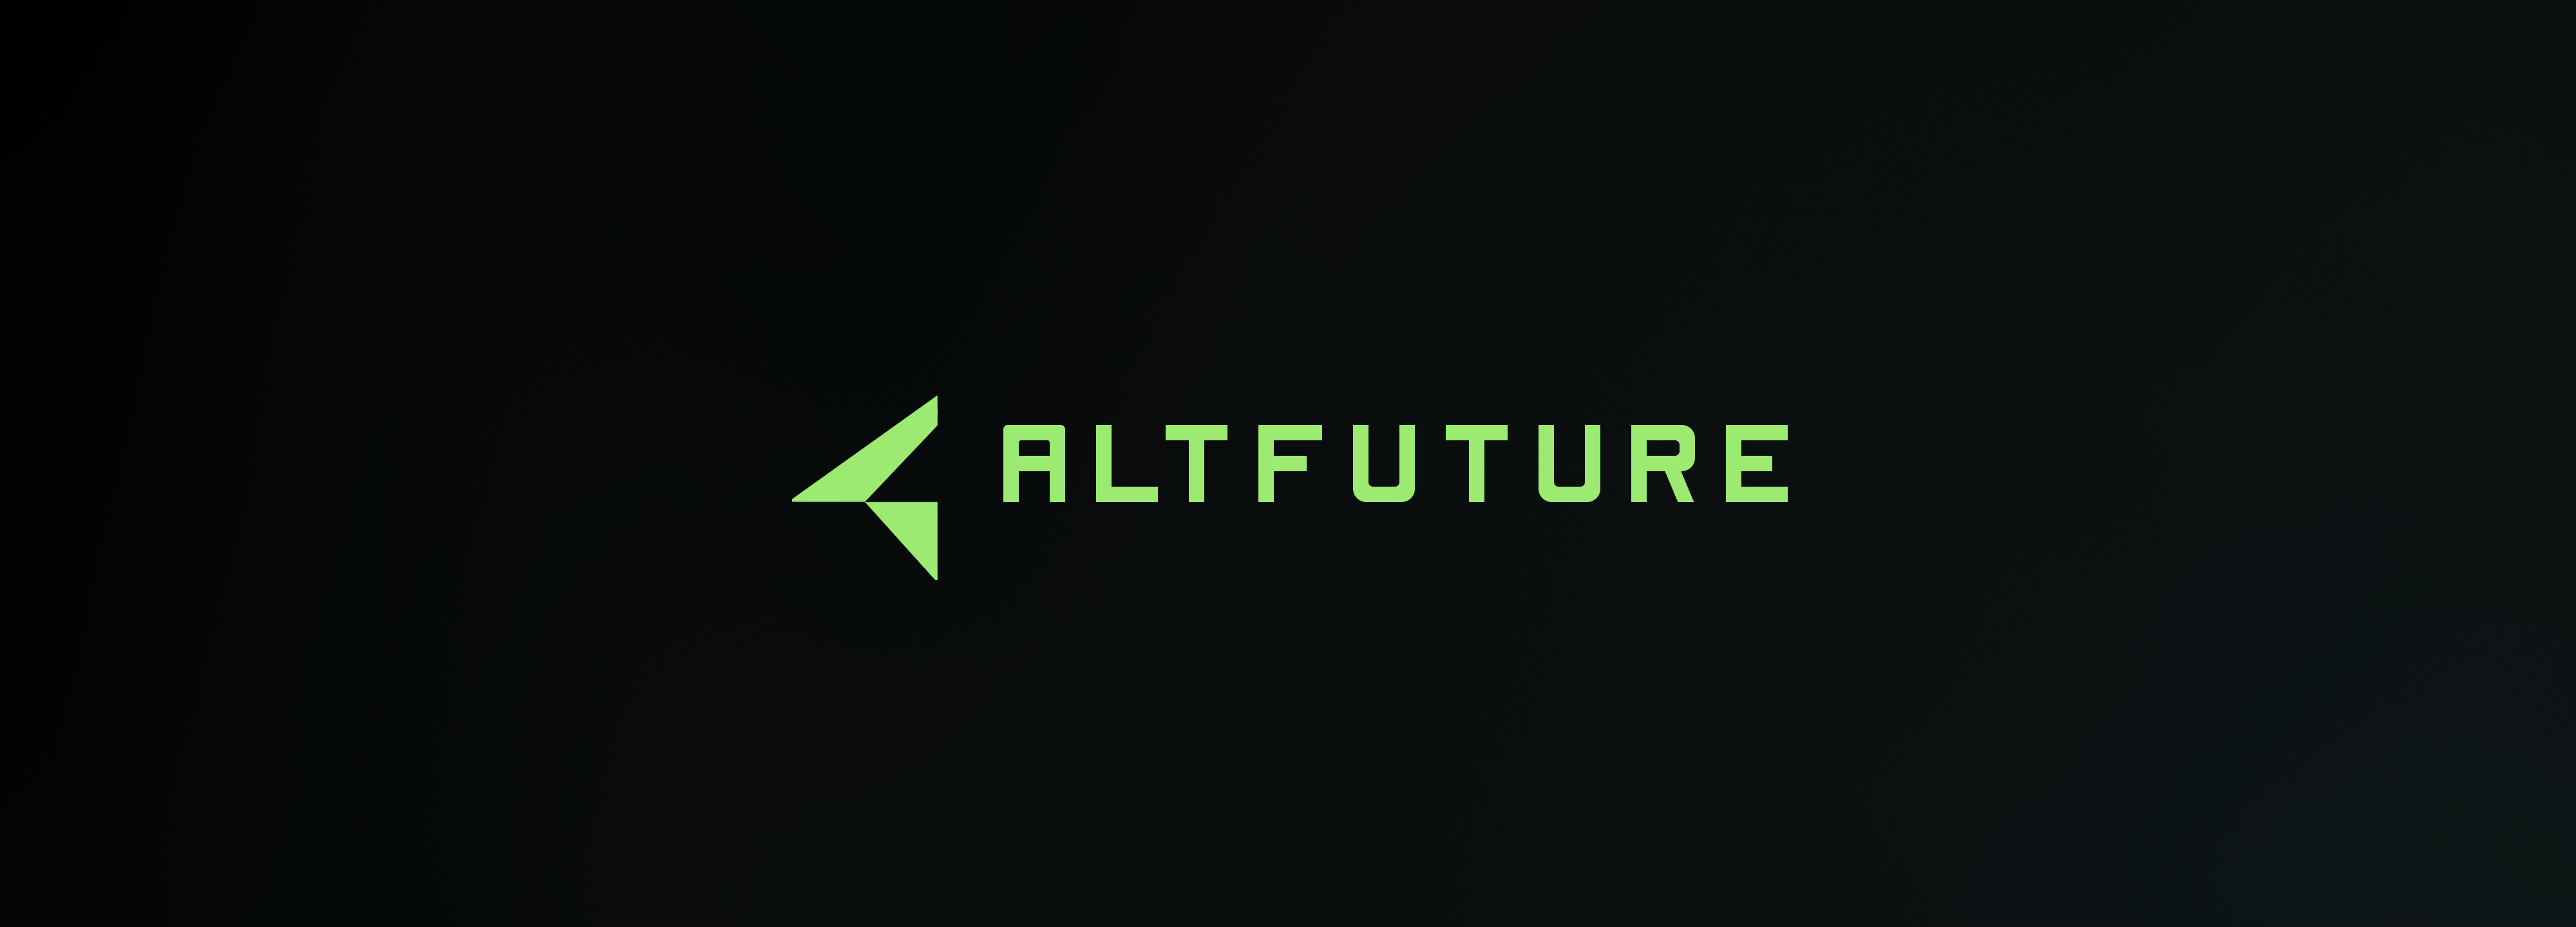 altfuture logo background